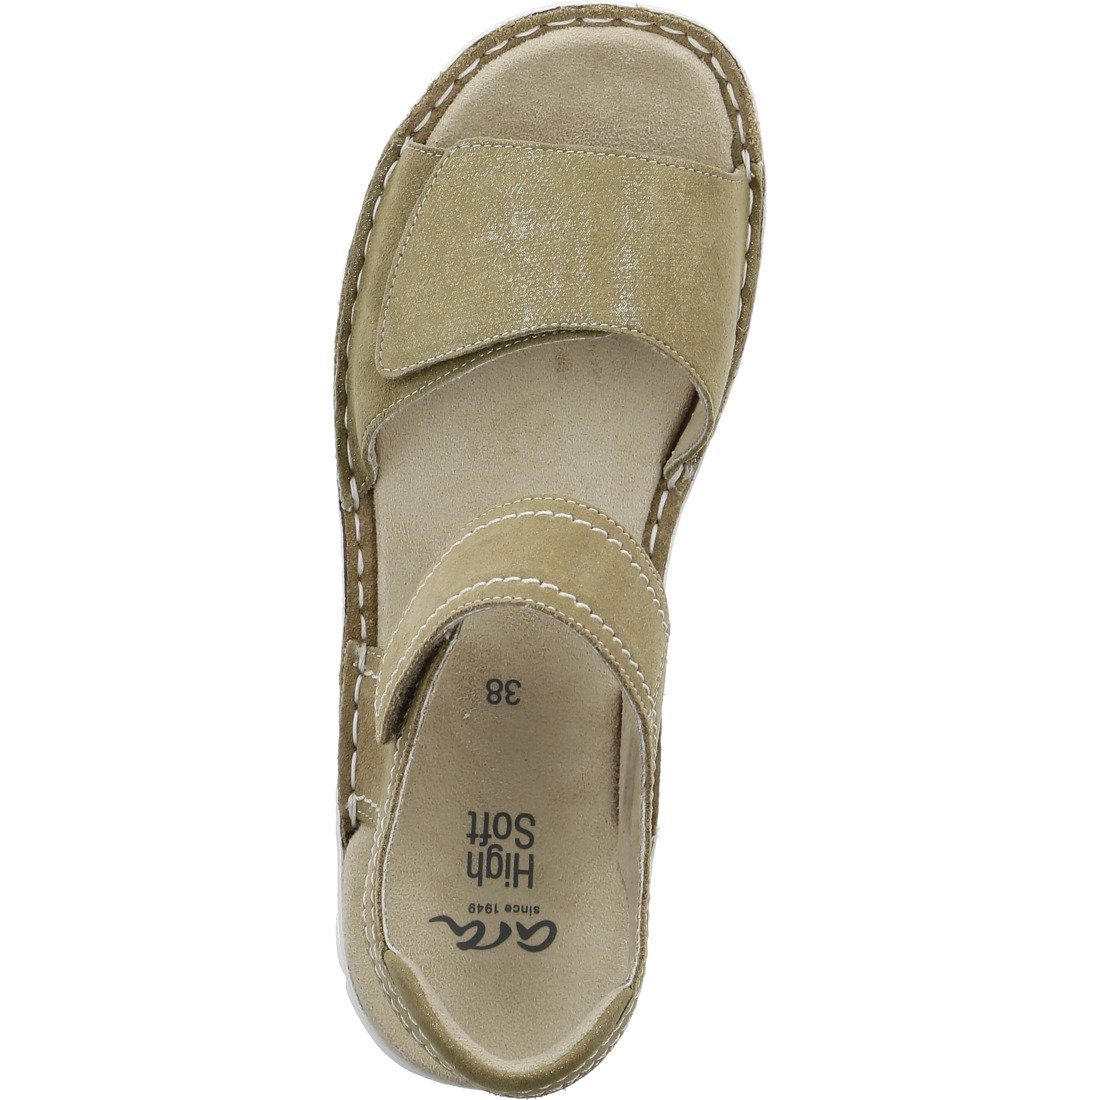 Sandalette Sandalette Schuhe, Ara Tampa - 048263 beige Ara Leder Damen